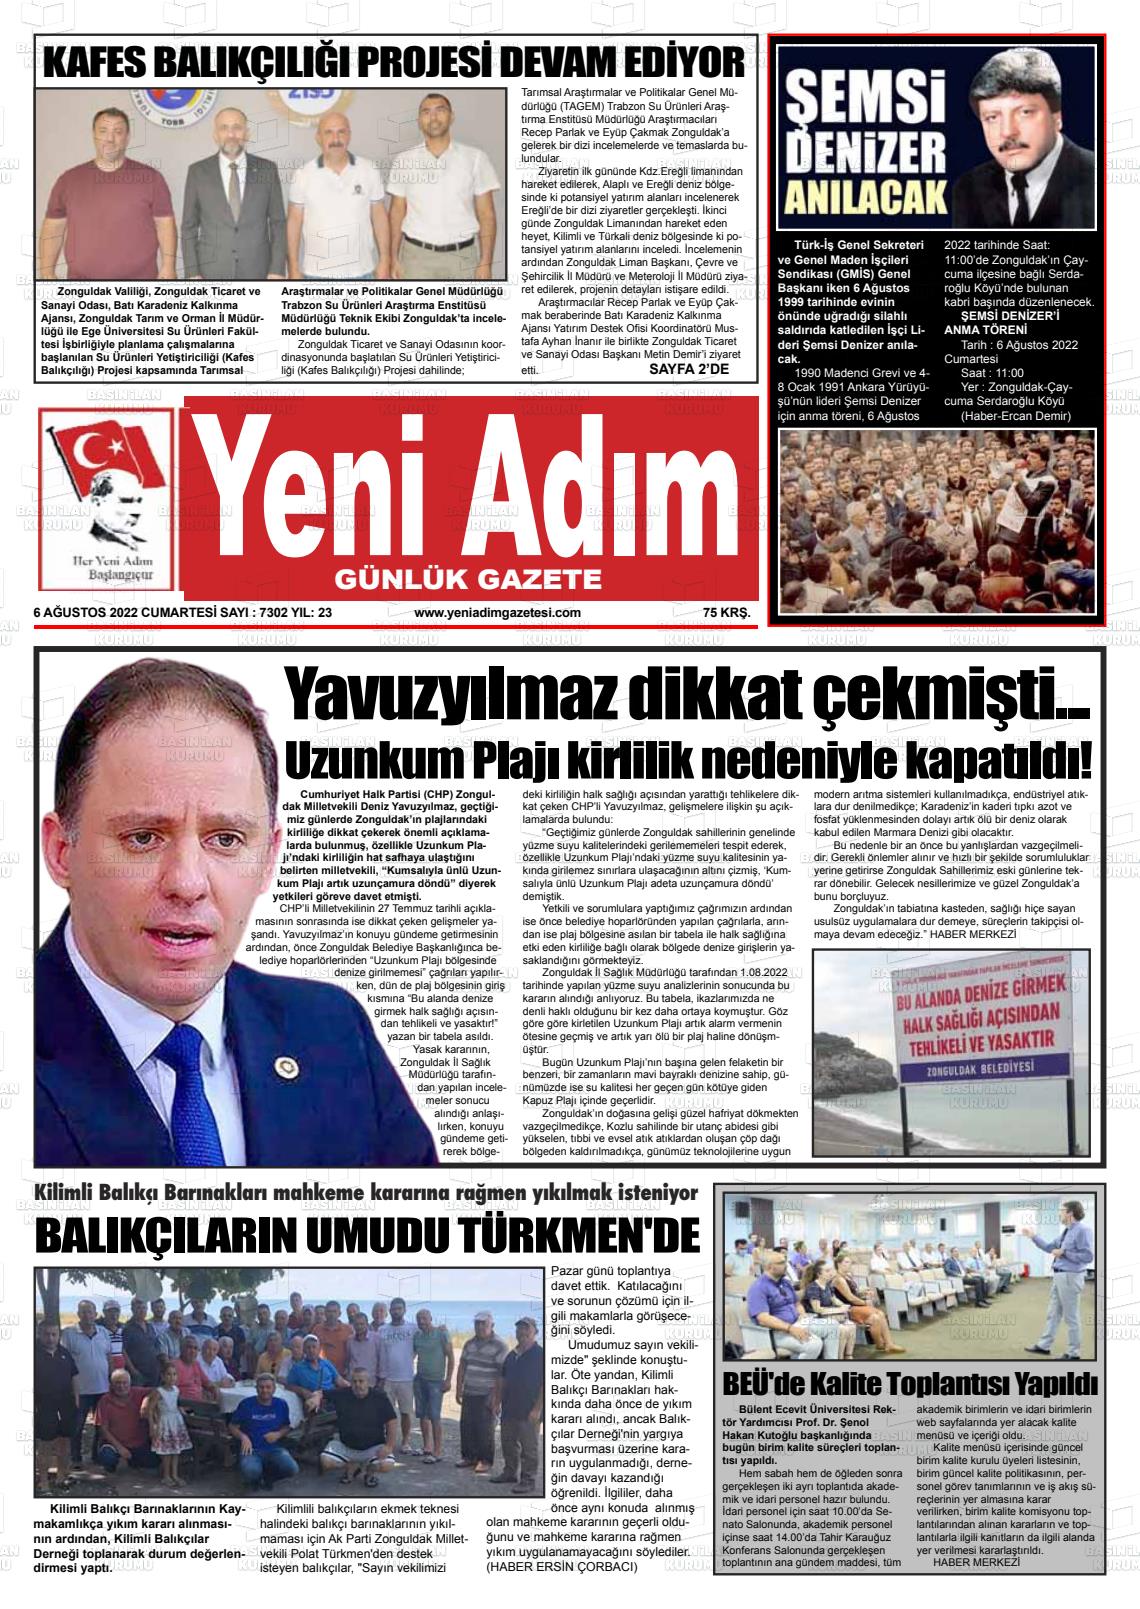 06 Ağustos 2022 Yeni Adım Gazete Manşeti